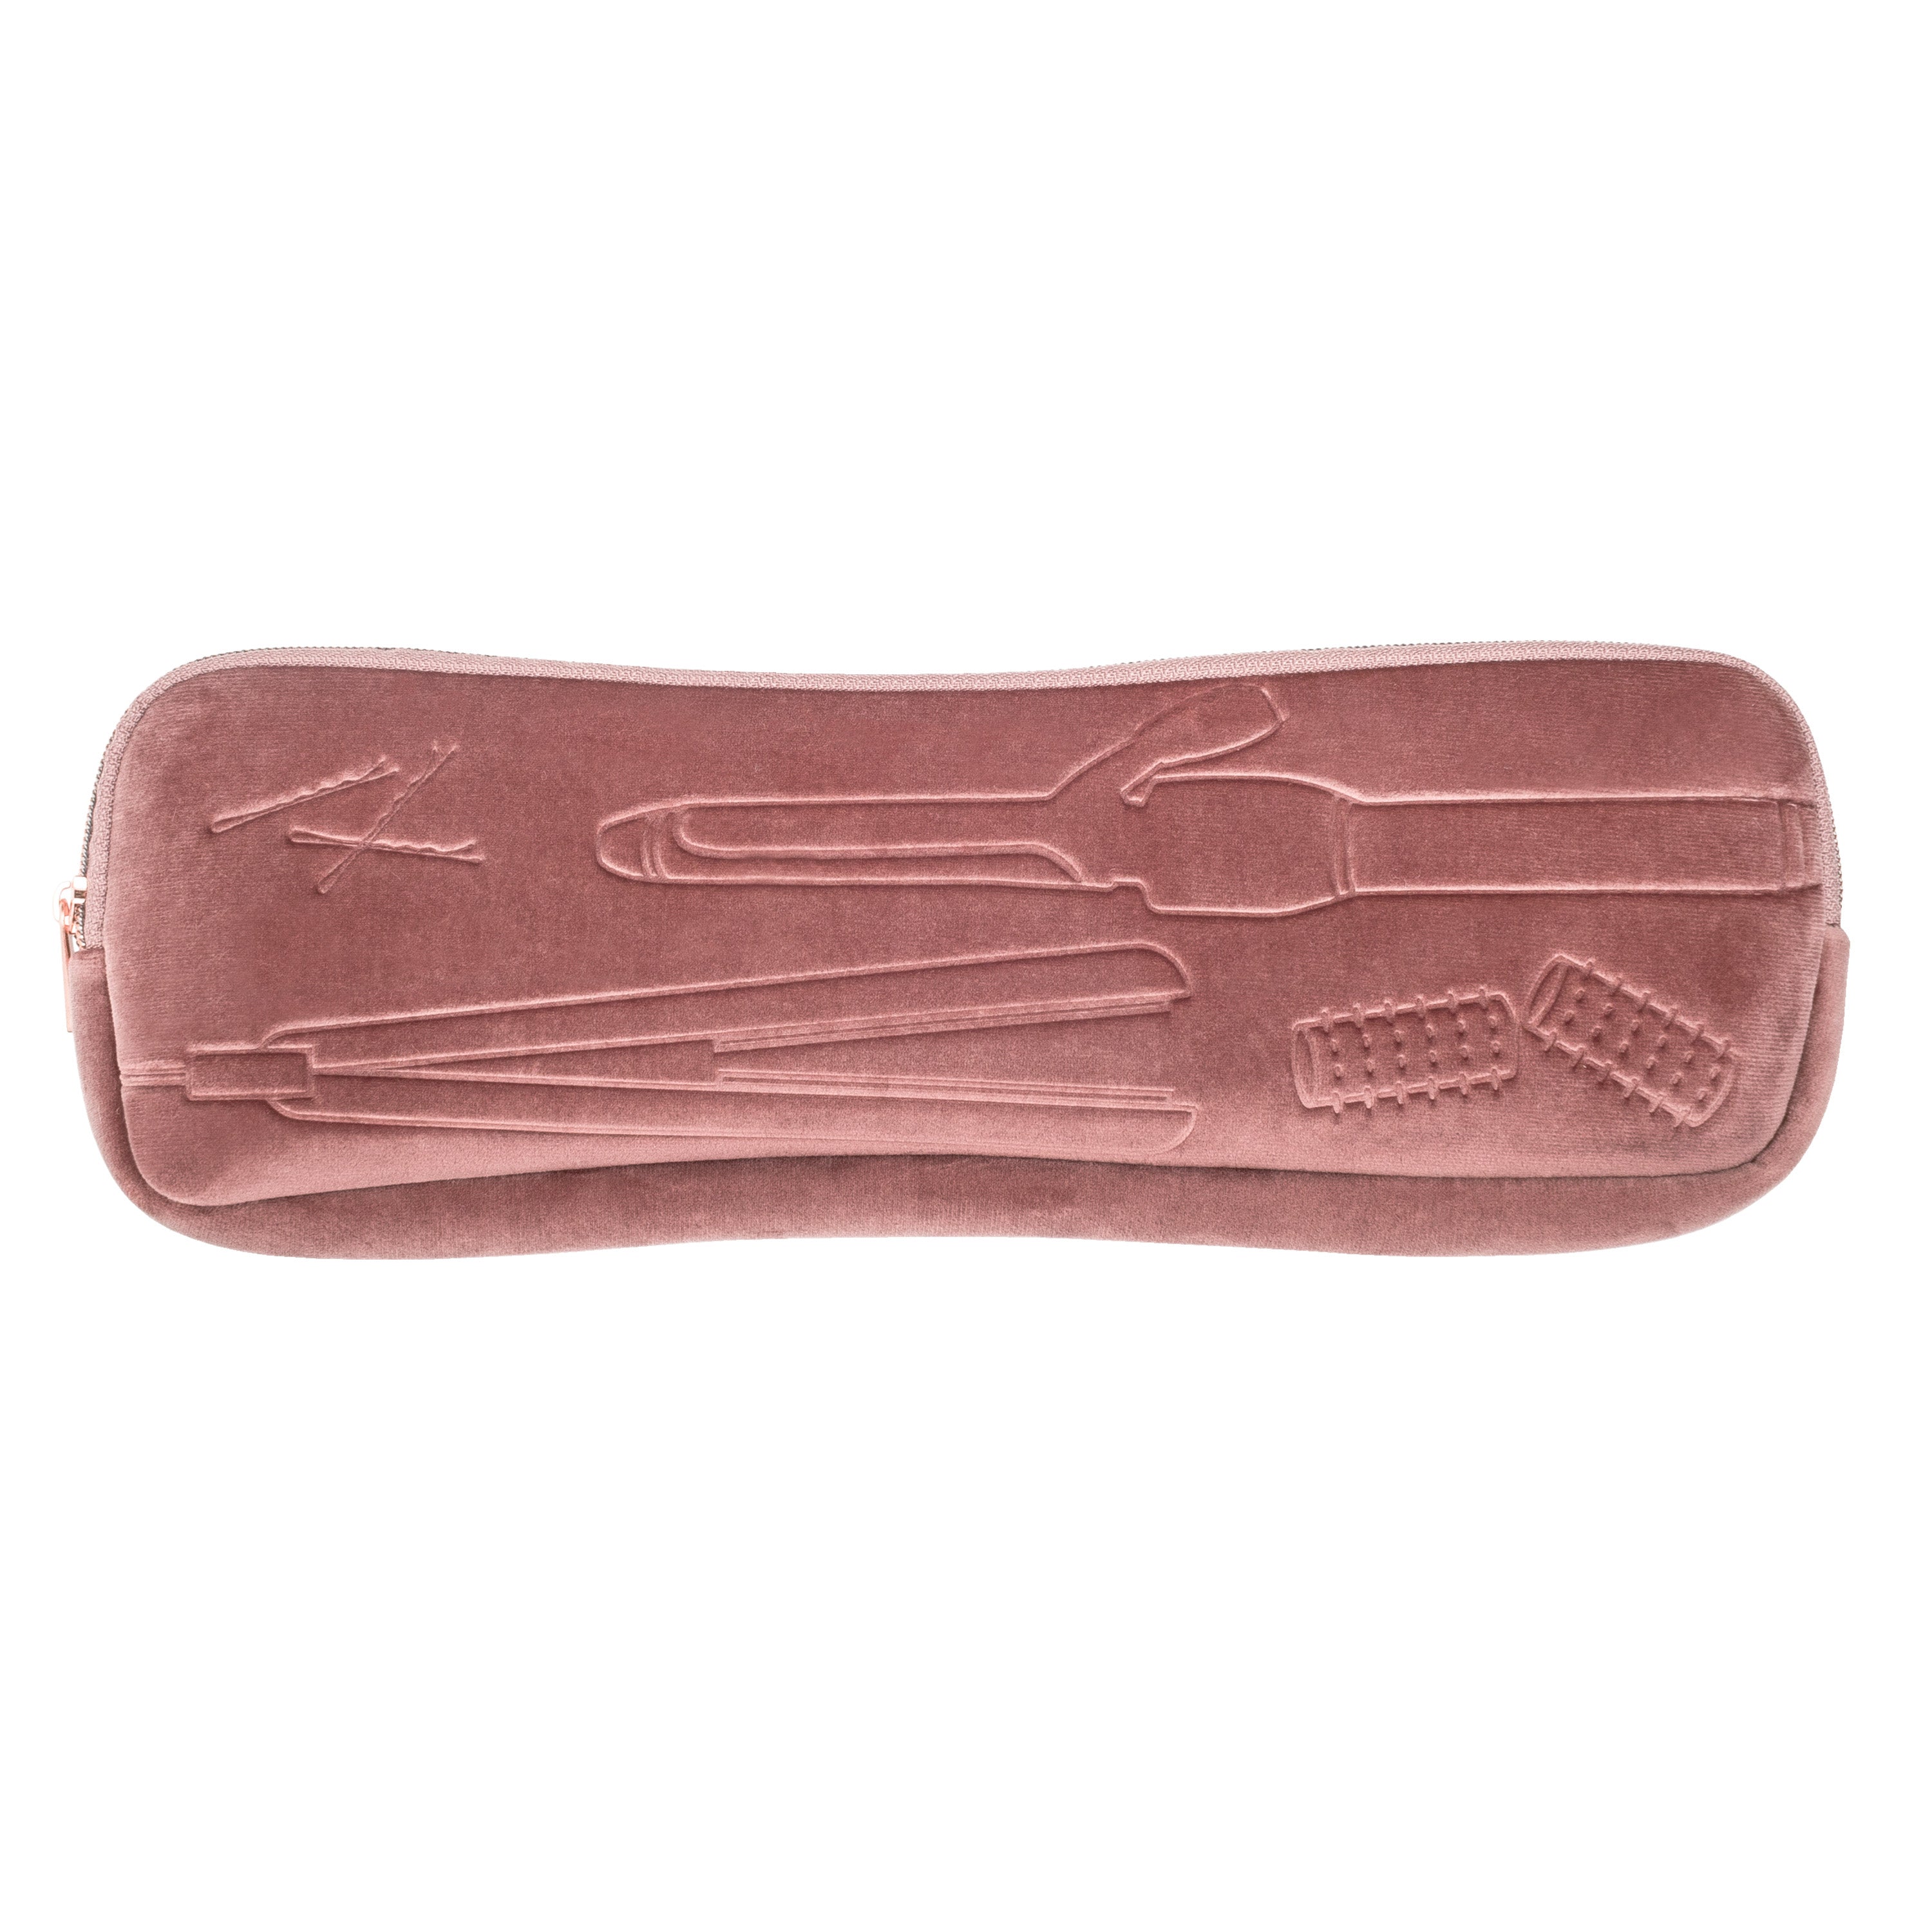 Pink velvet flat iron pouch with rose gold zipper